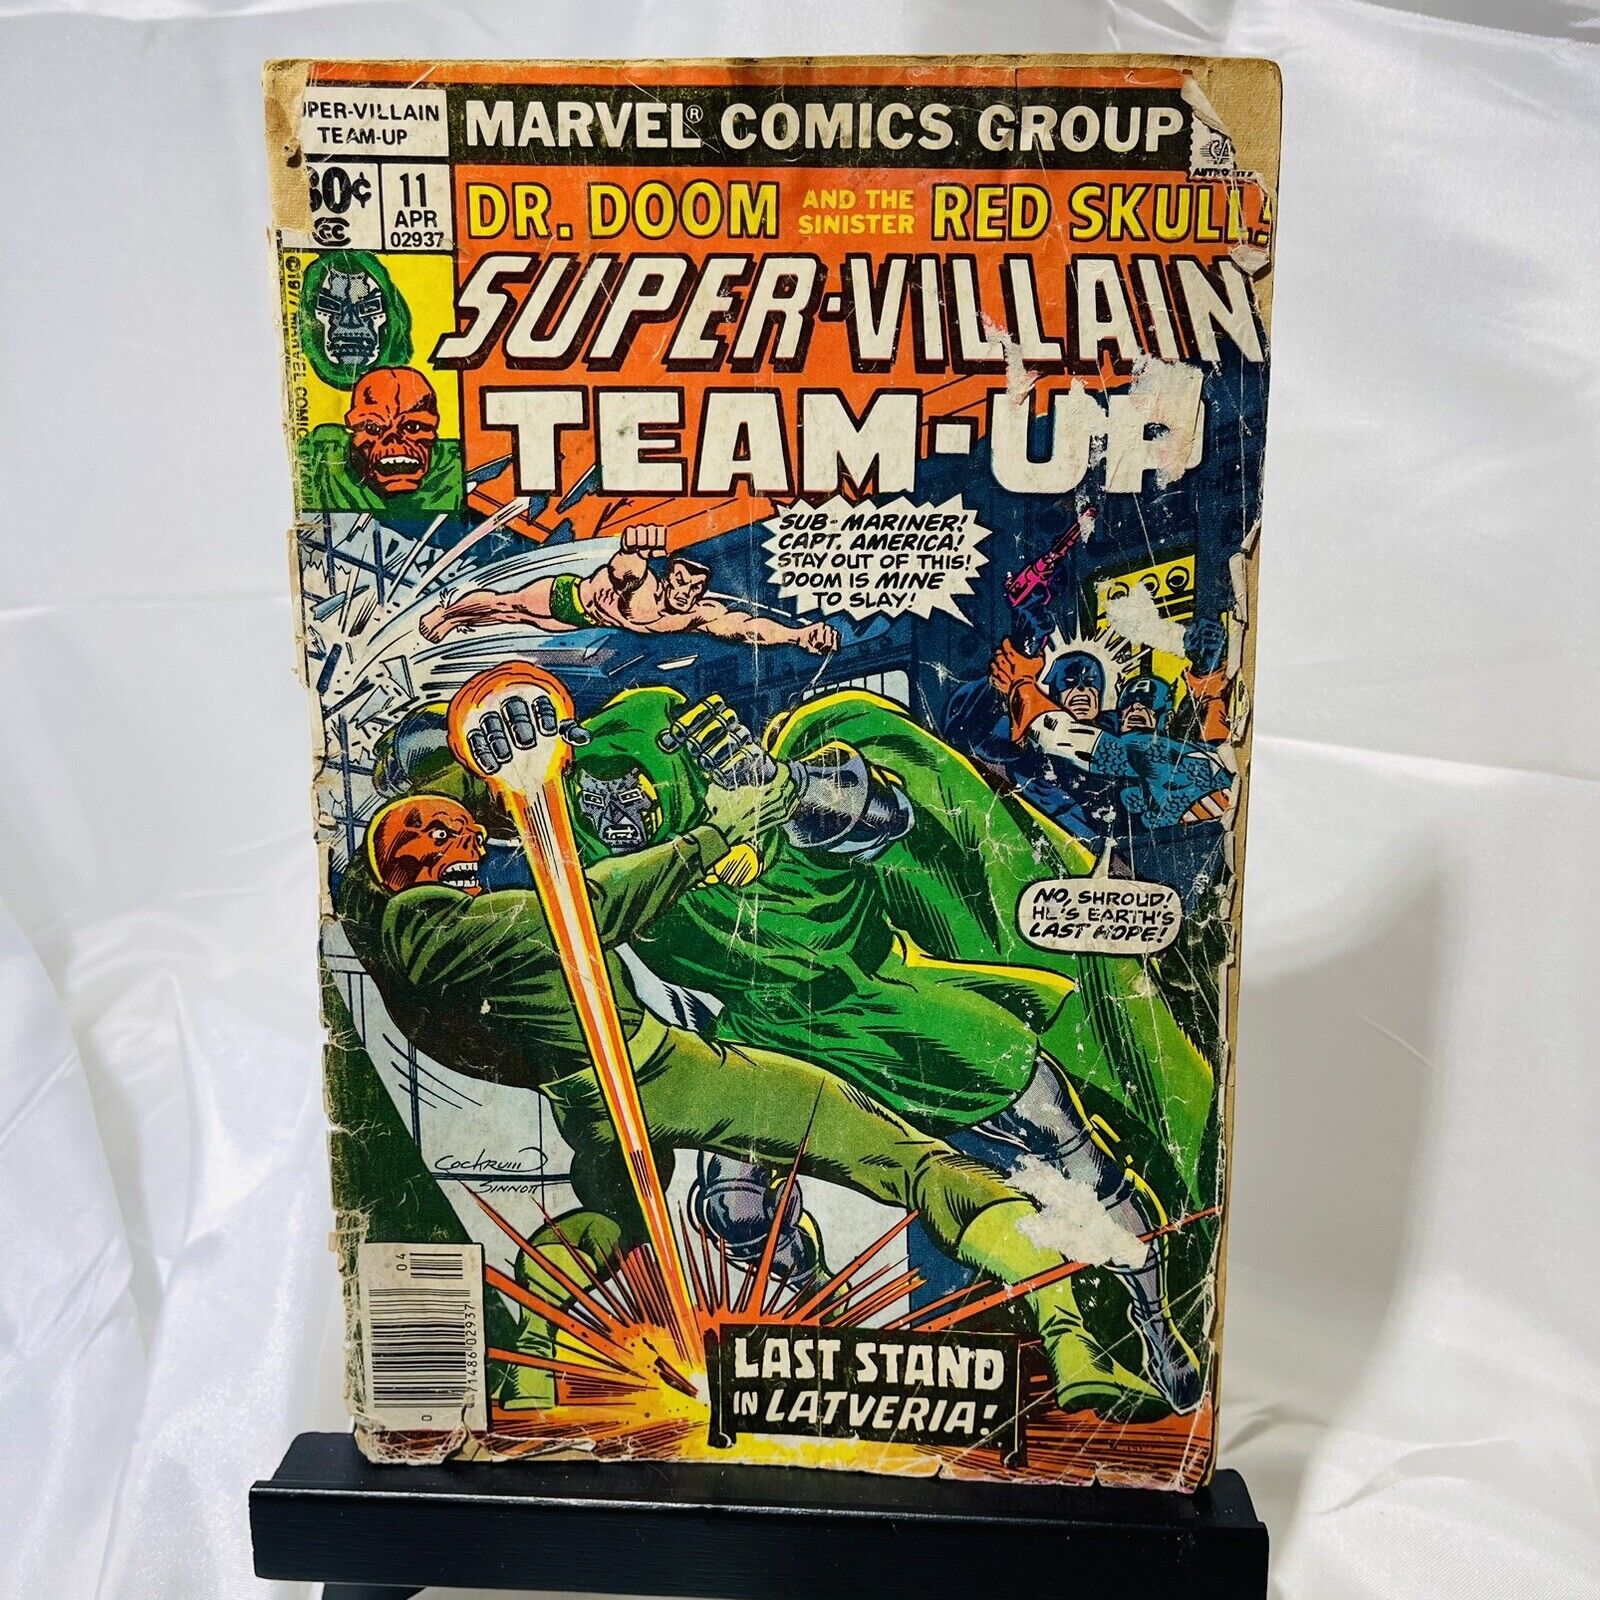 Super-Villain Team-Up #11 Marvel Comics (April, 1977) Newsstand